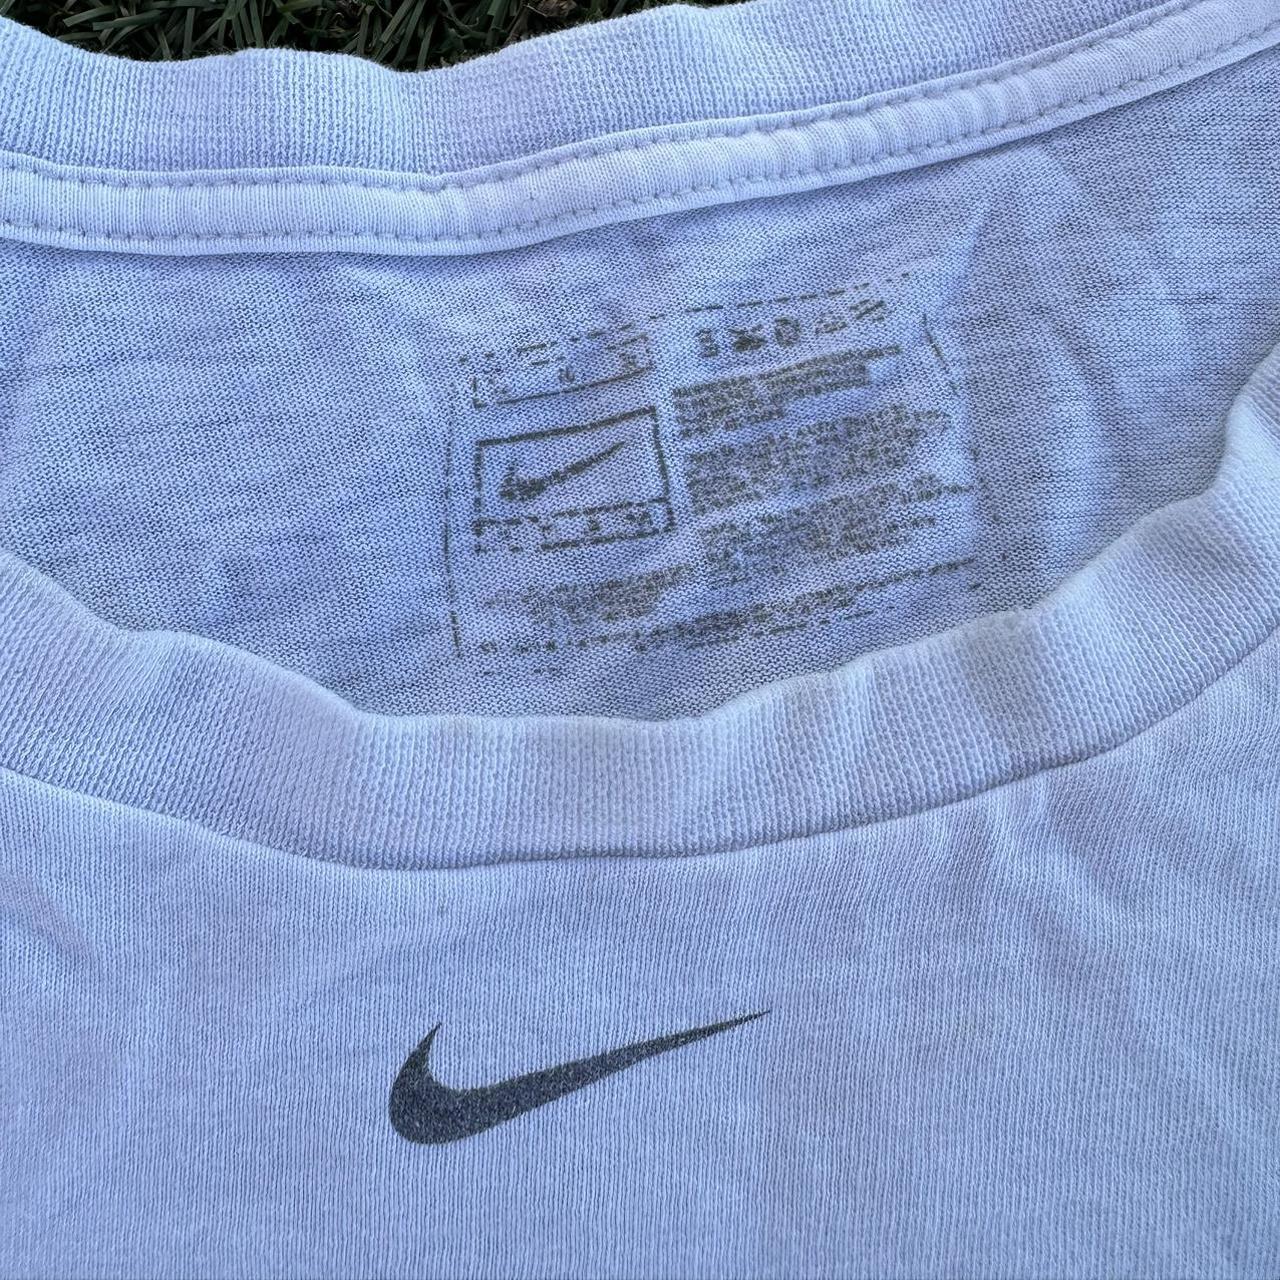 Vintage Nike Dri fit Pittsburgh pirates shirt Sz M - Depop